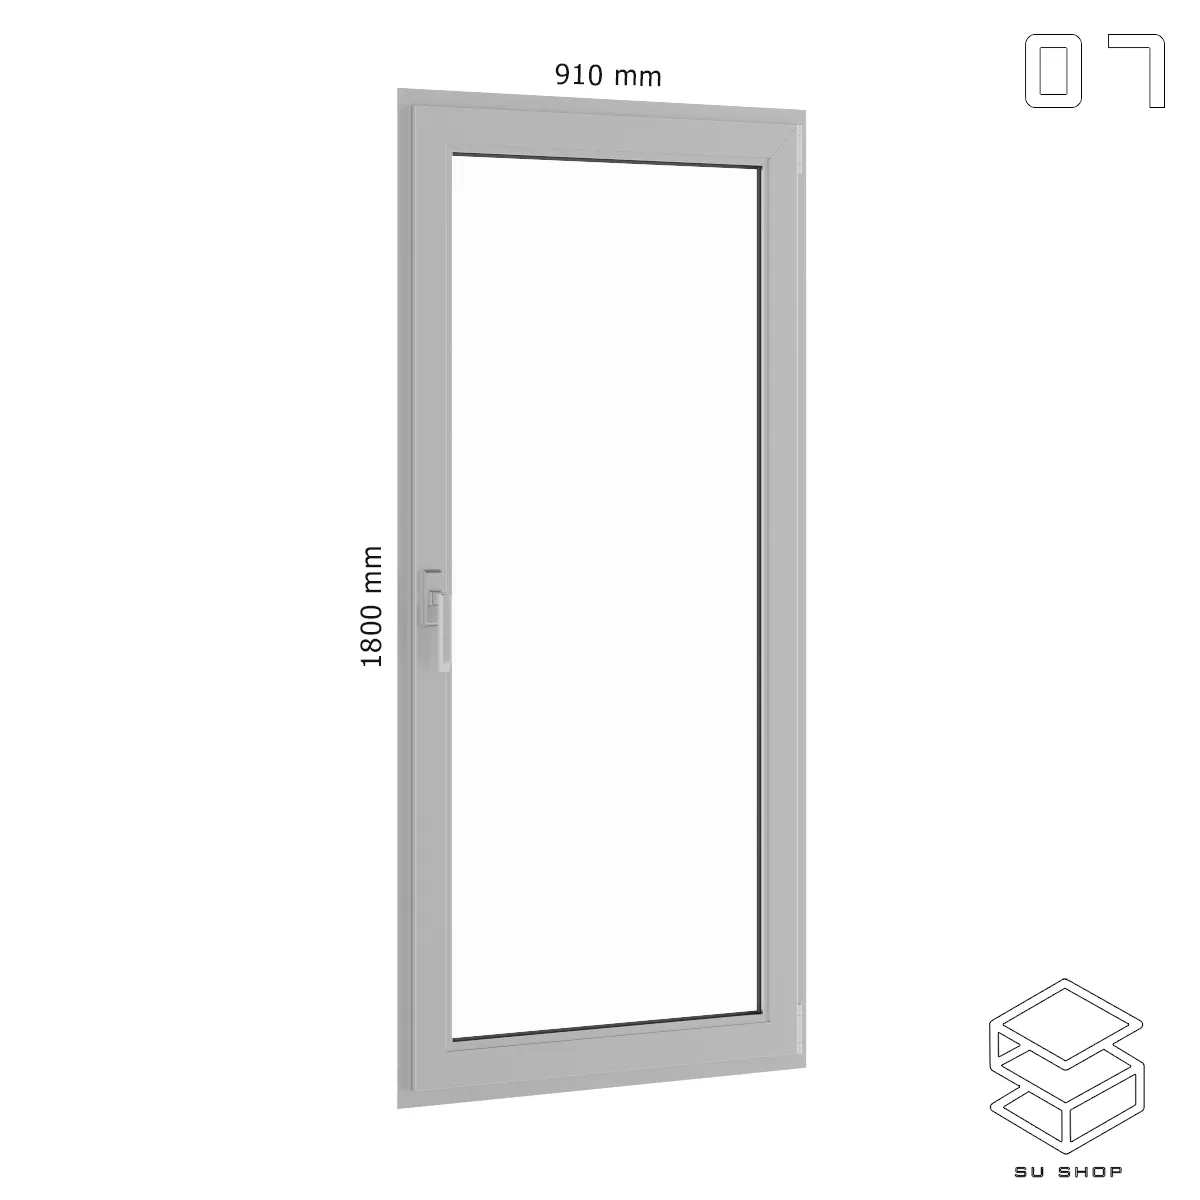 MODERN WINDOWS - SKETCHUP 3D MODEL - VRAY OR ENSCAPE - ID16795